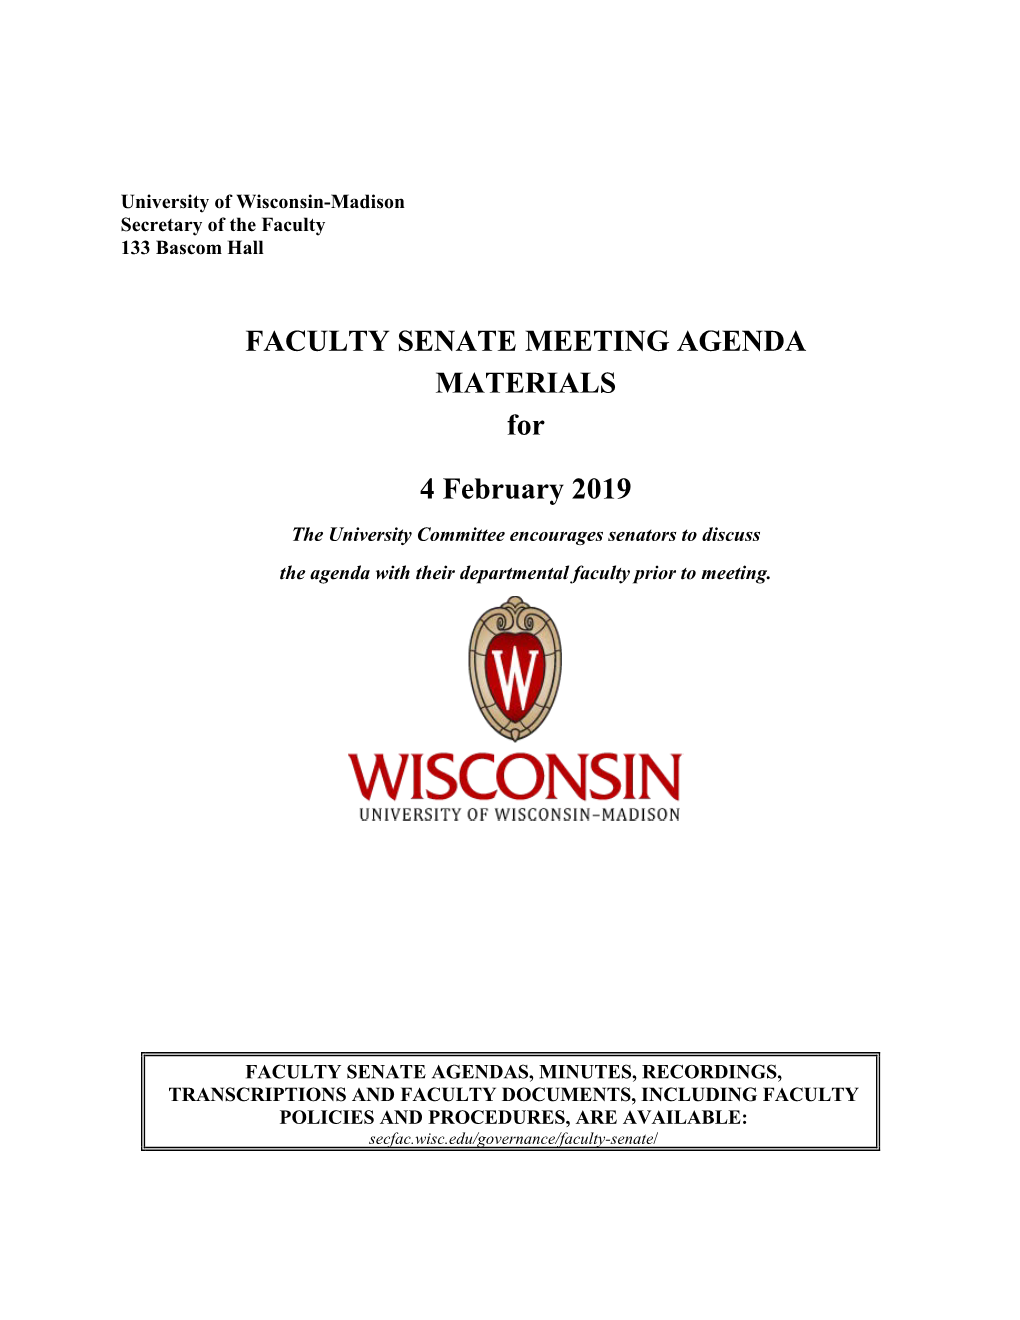 FACULTY SENATE MEETING AGENDA MATERIALS for 4 February 2019